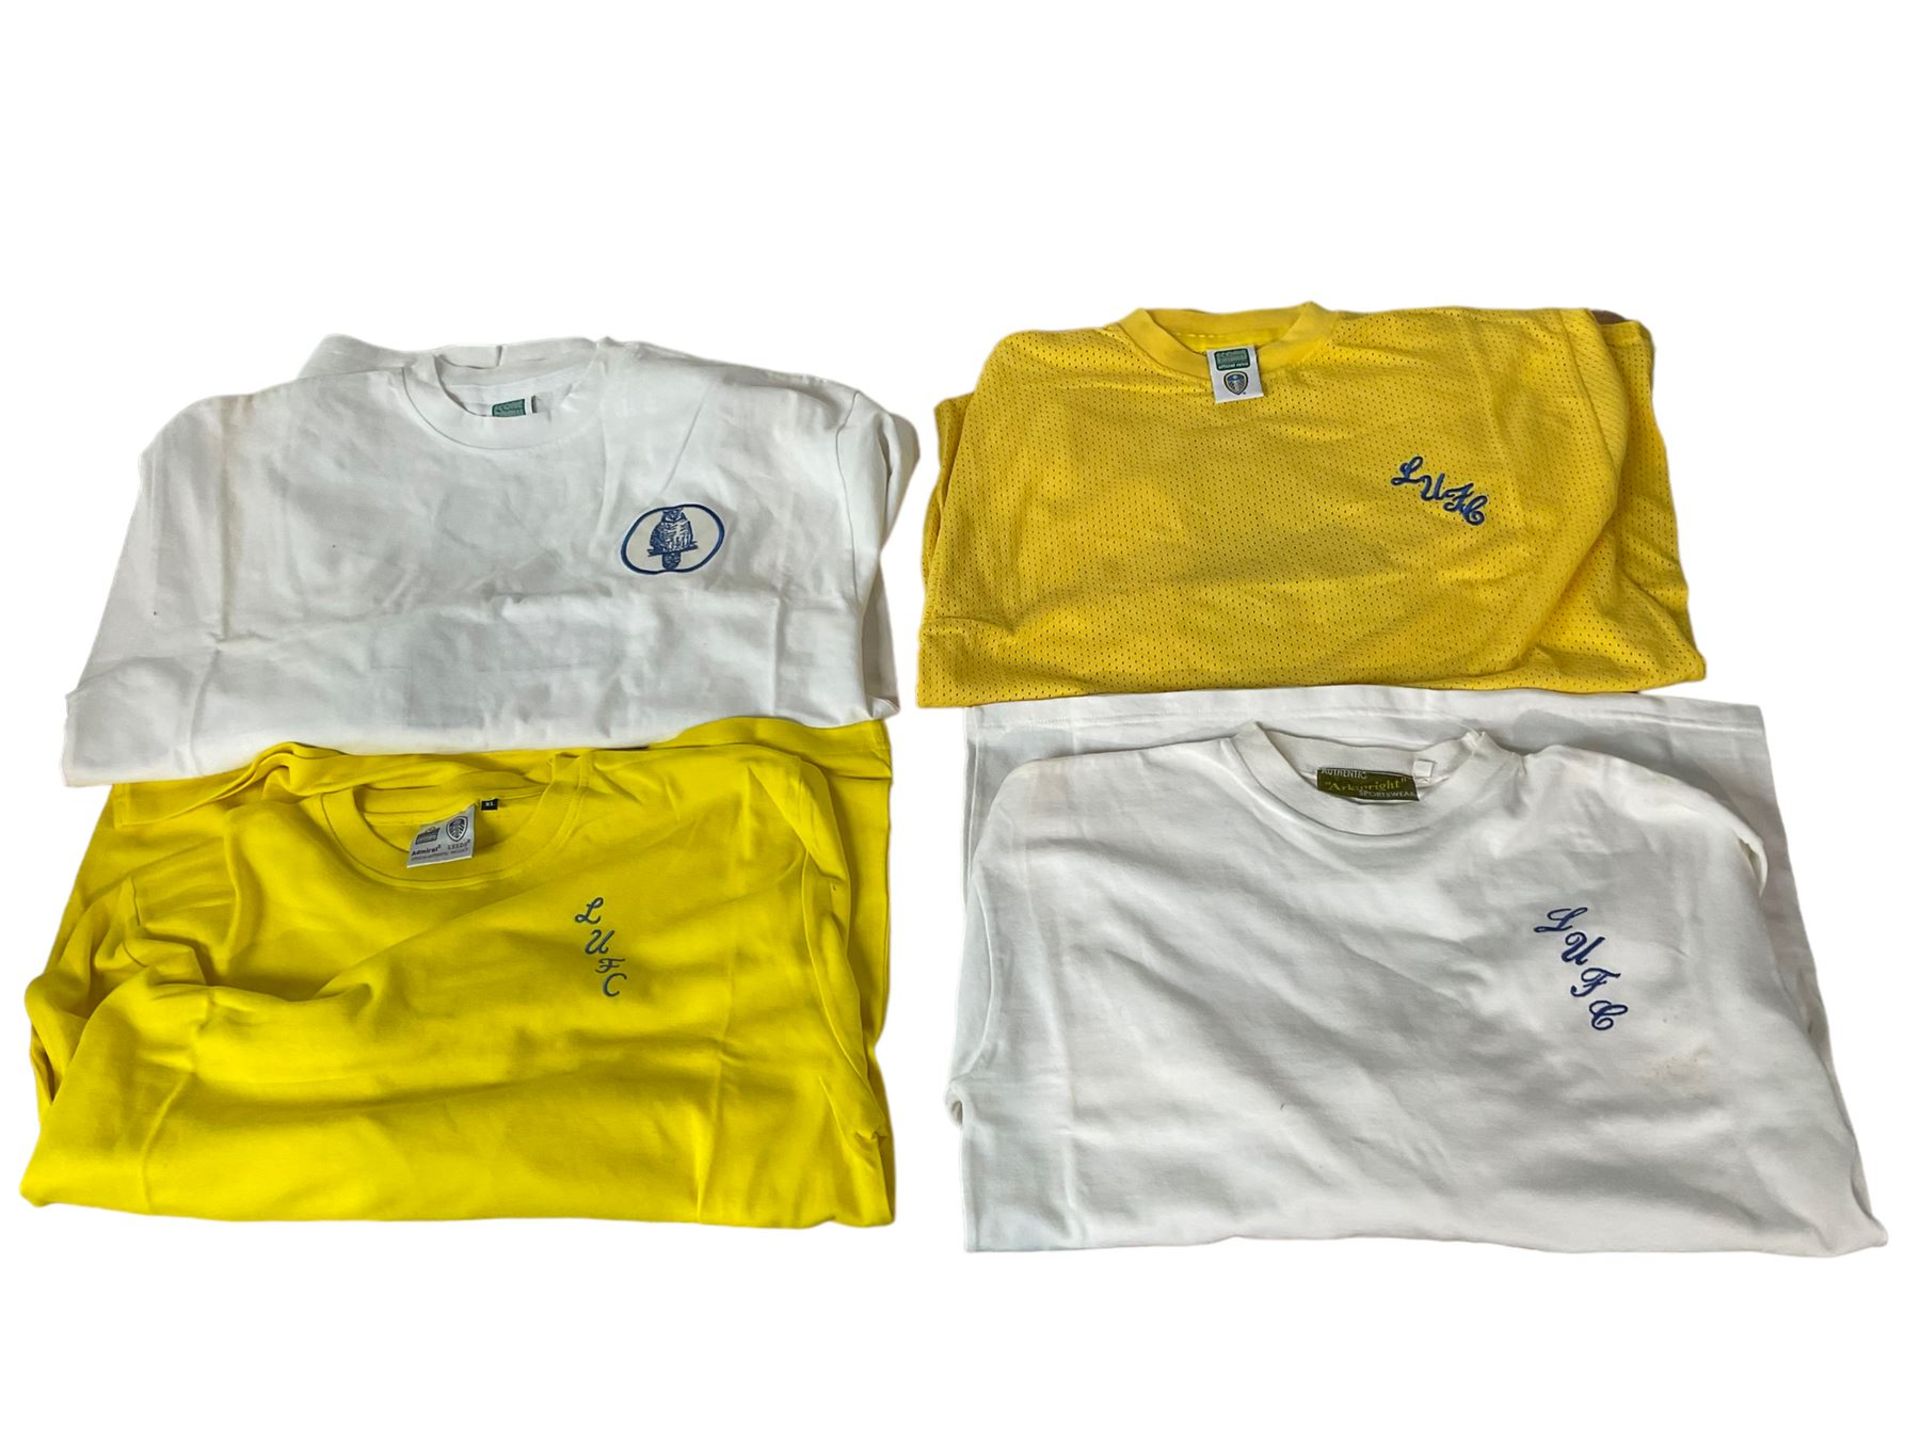 Leeds United football club - twenty-three replica shirts including 1970s 'Arkwright' - Image 4 of 7